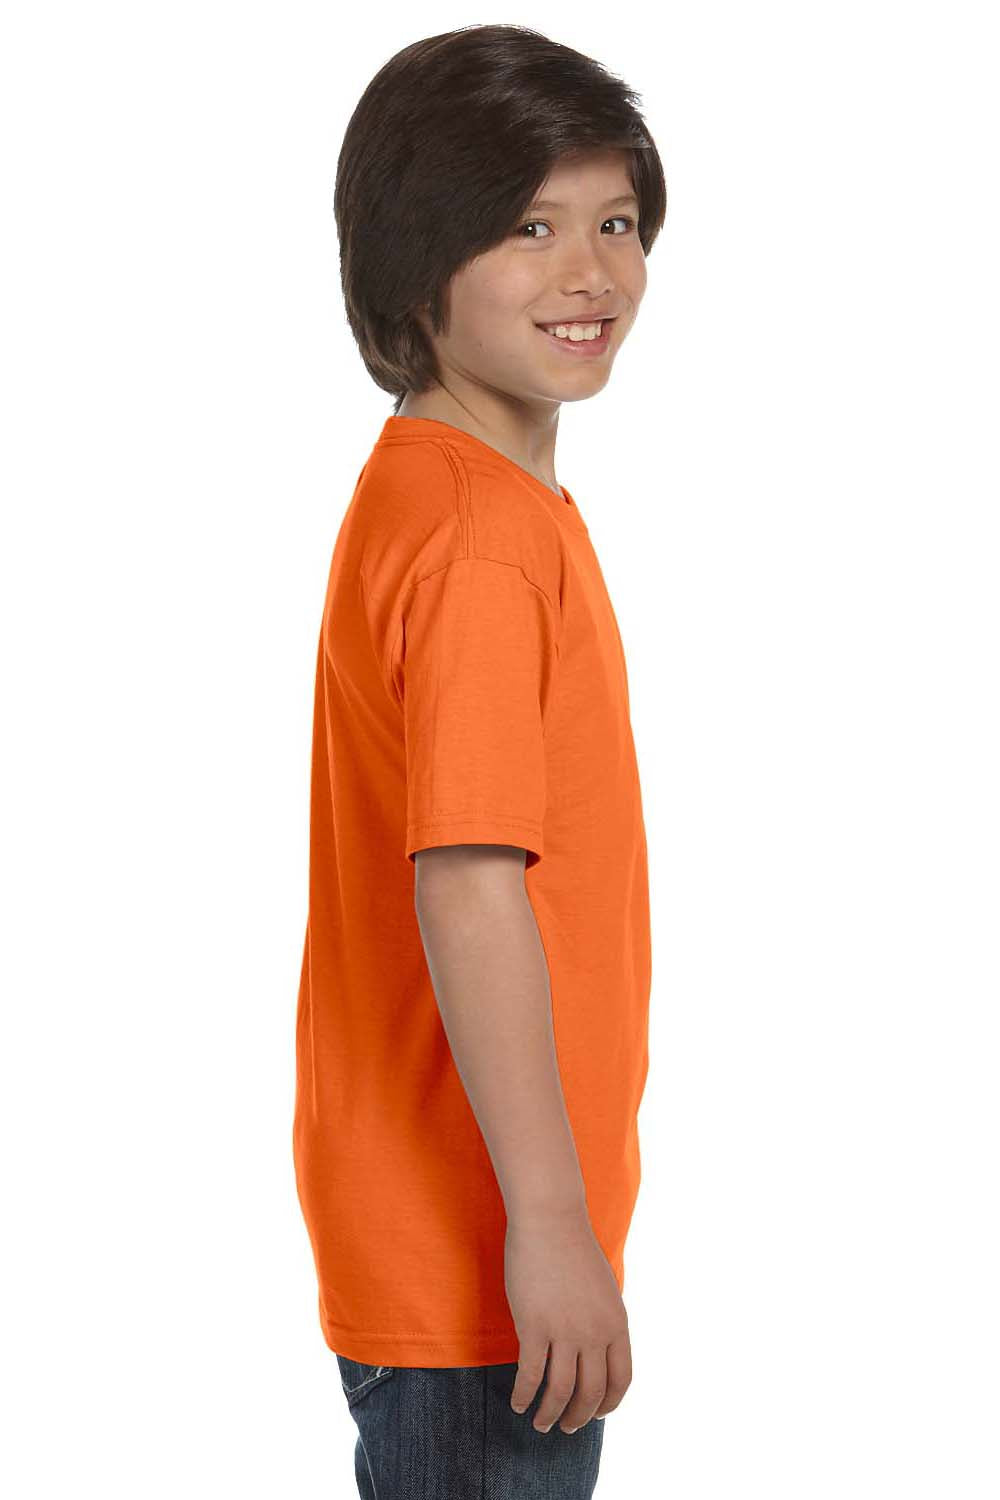 Hanes 5380 Youth Beefy-T Short Sleeve Crewneck T-Shirt Orange Side